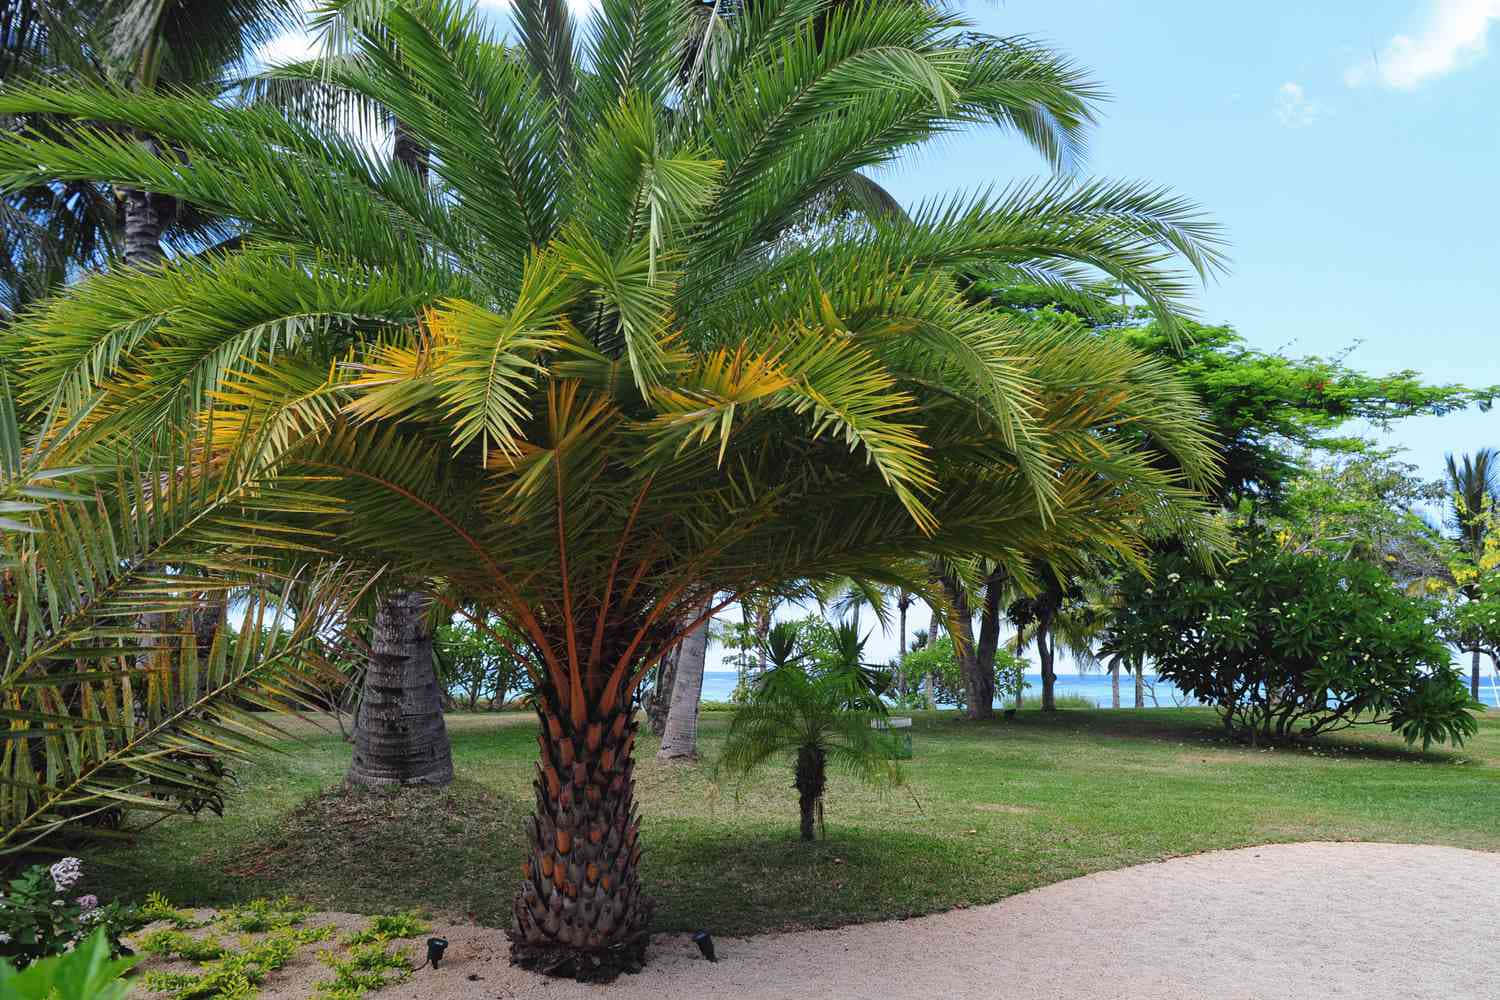 Sommerdage tilbragt slentrende ved en palme fyldt med kokosnødder.